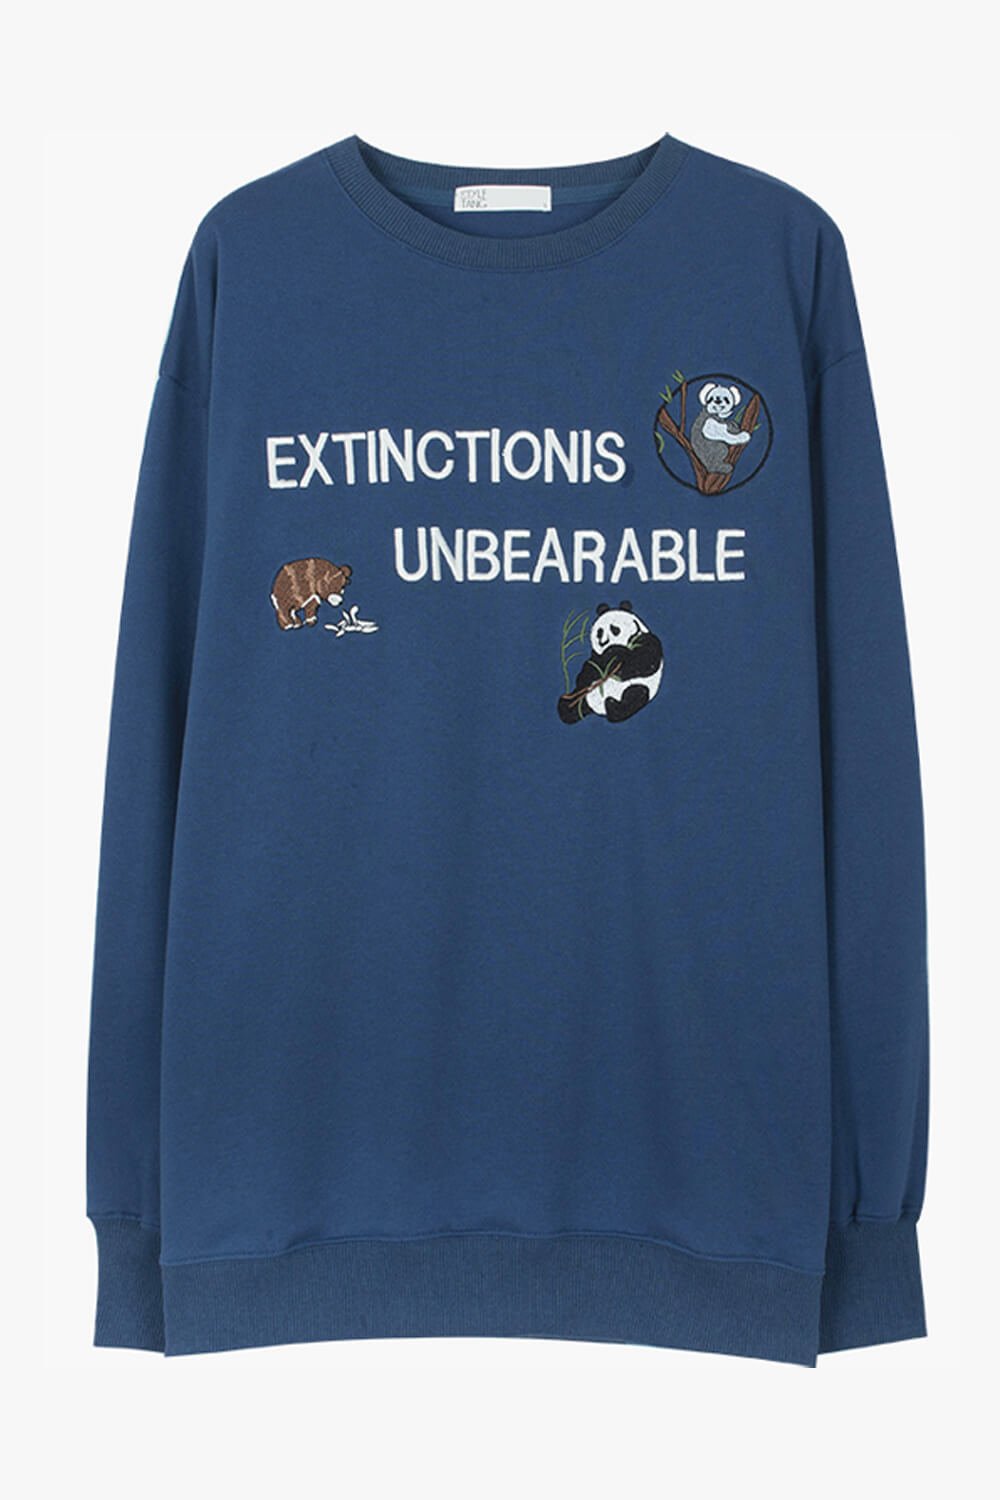 Extinction Is Unbearable Retro Sweatshirt